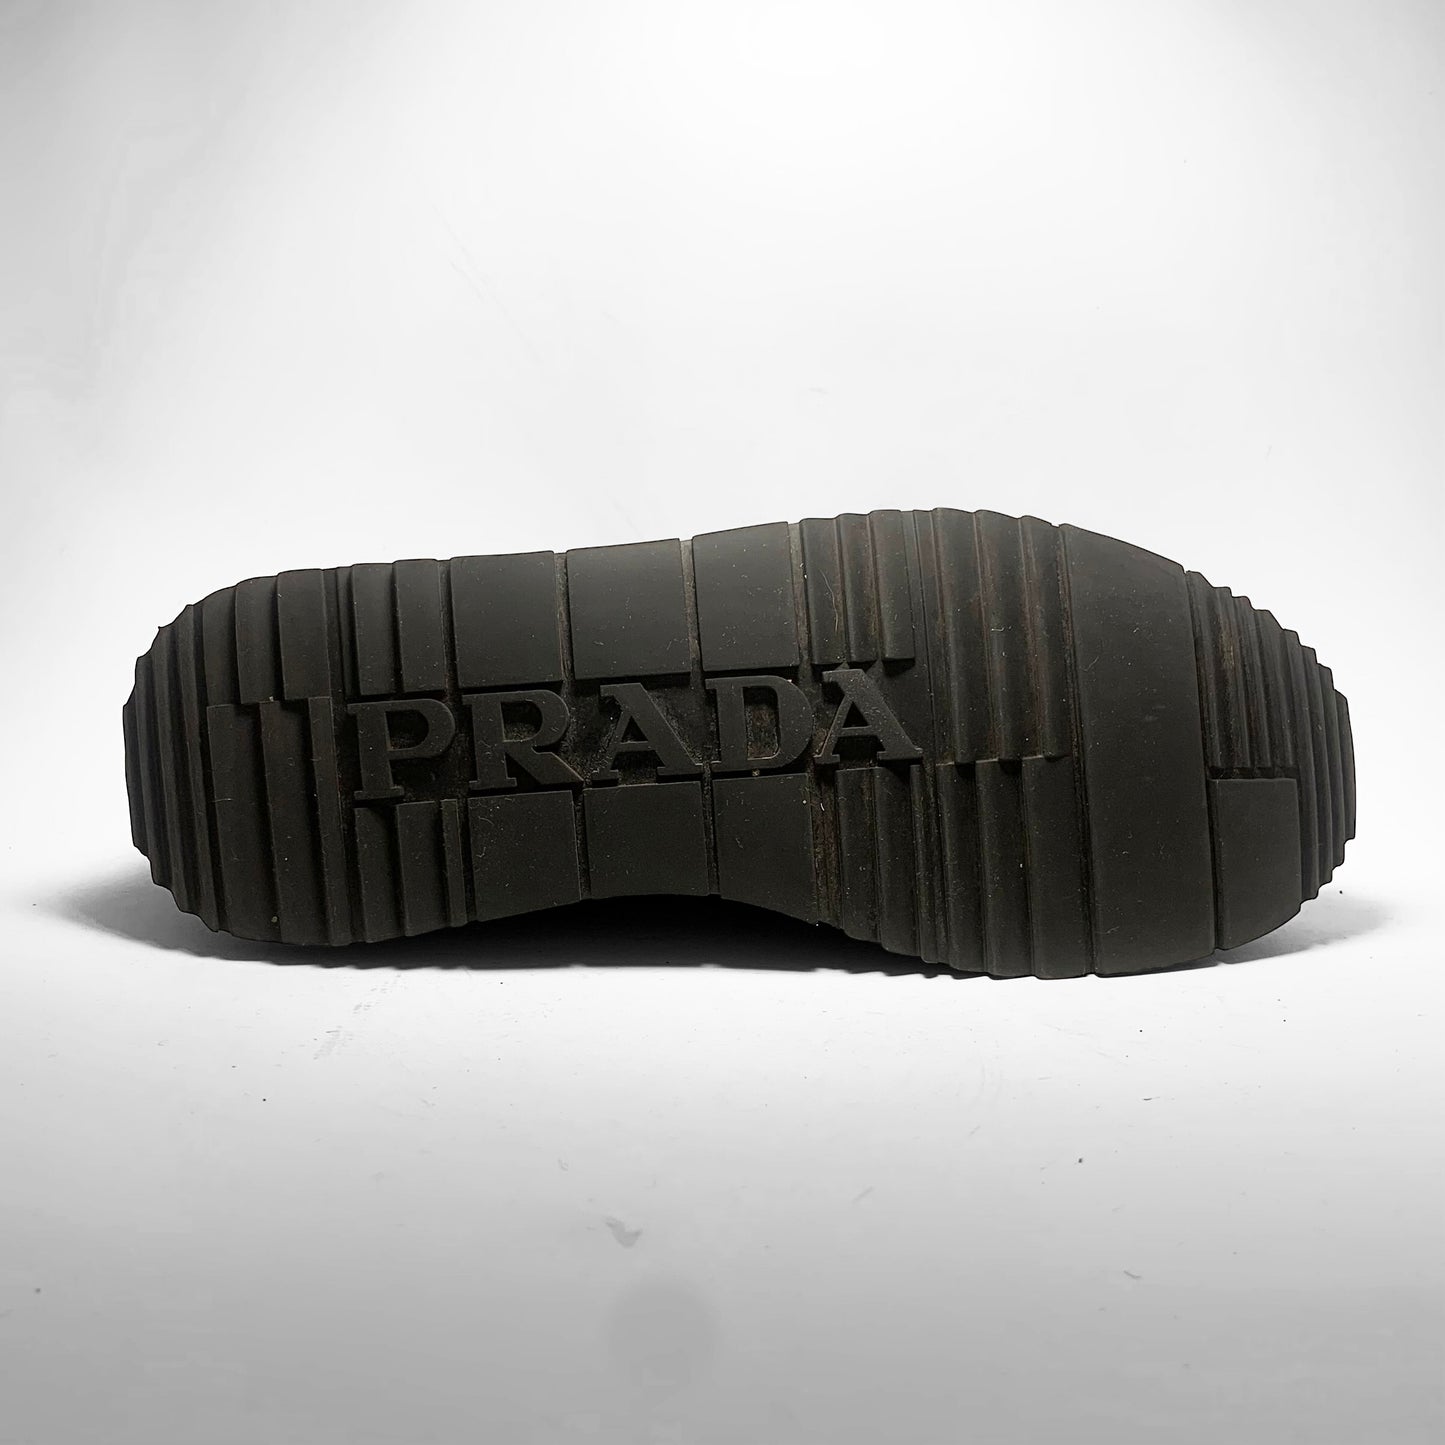 Prada Patent Leather Shoes (2010)